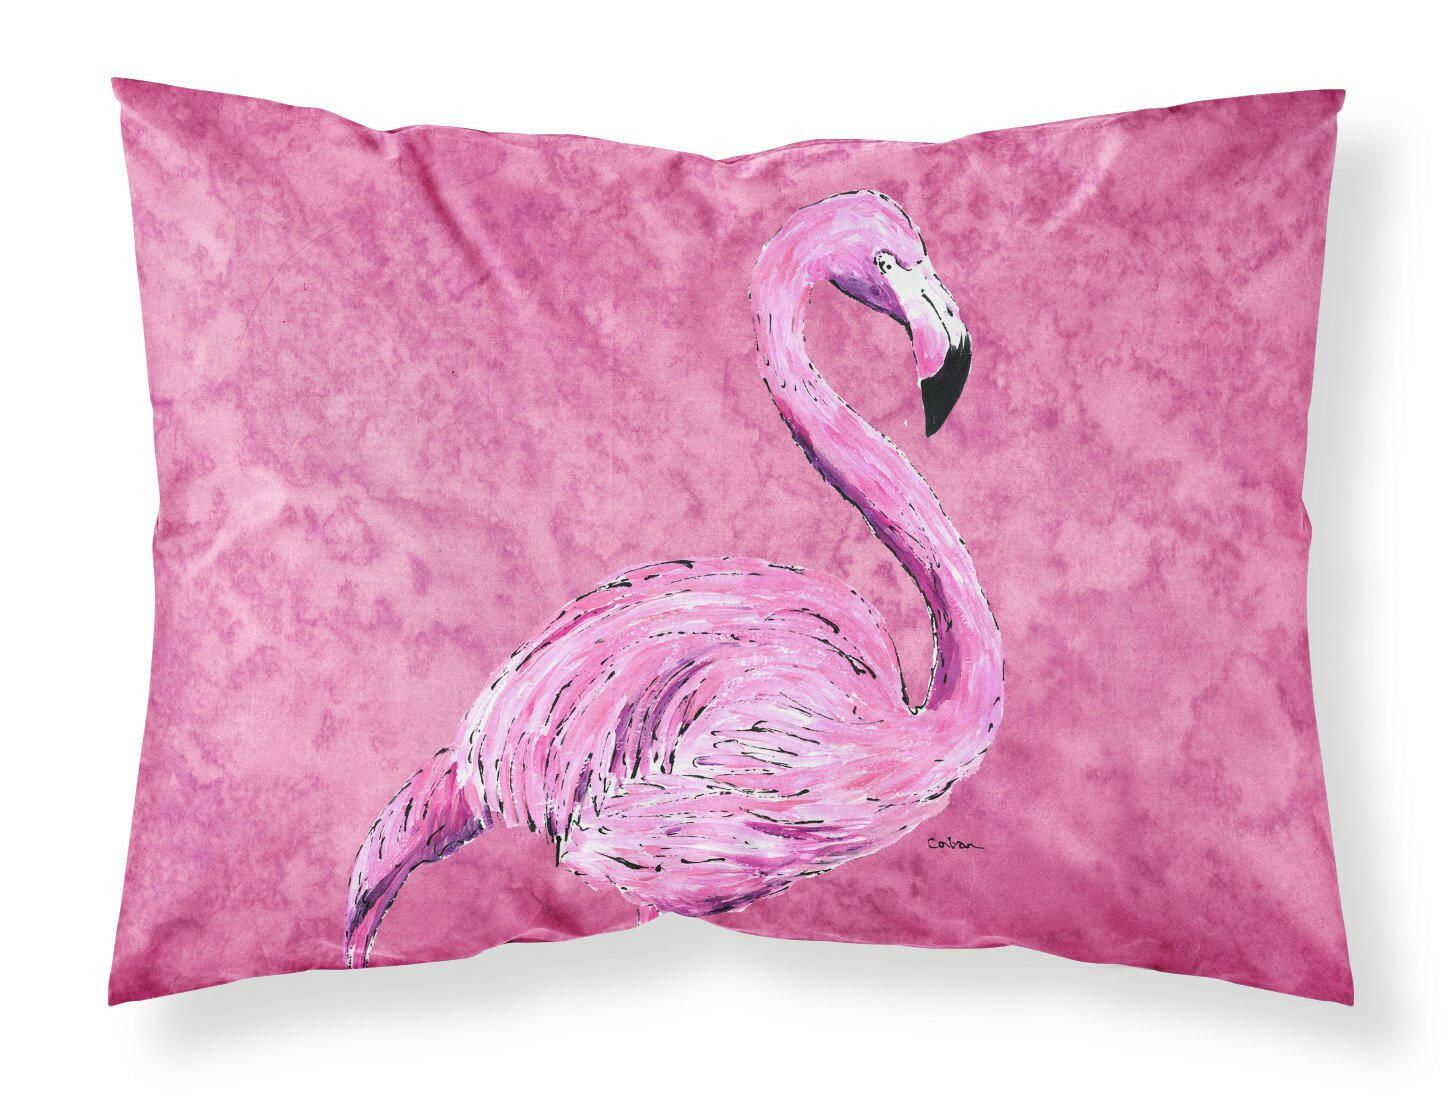 Flamingo on Pink Moisture wicking Fabric standard pillowcase by Caroline's Treasures